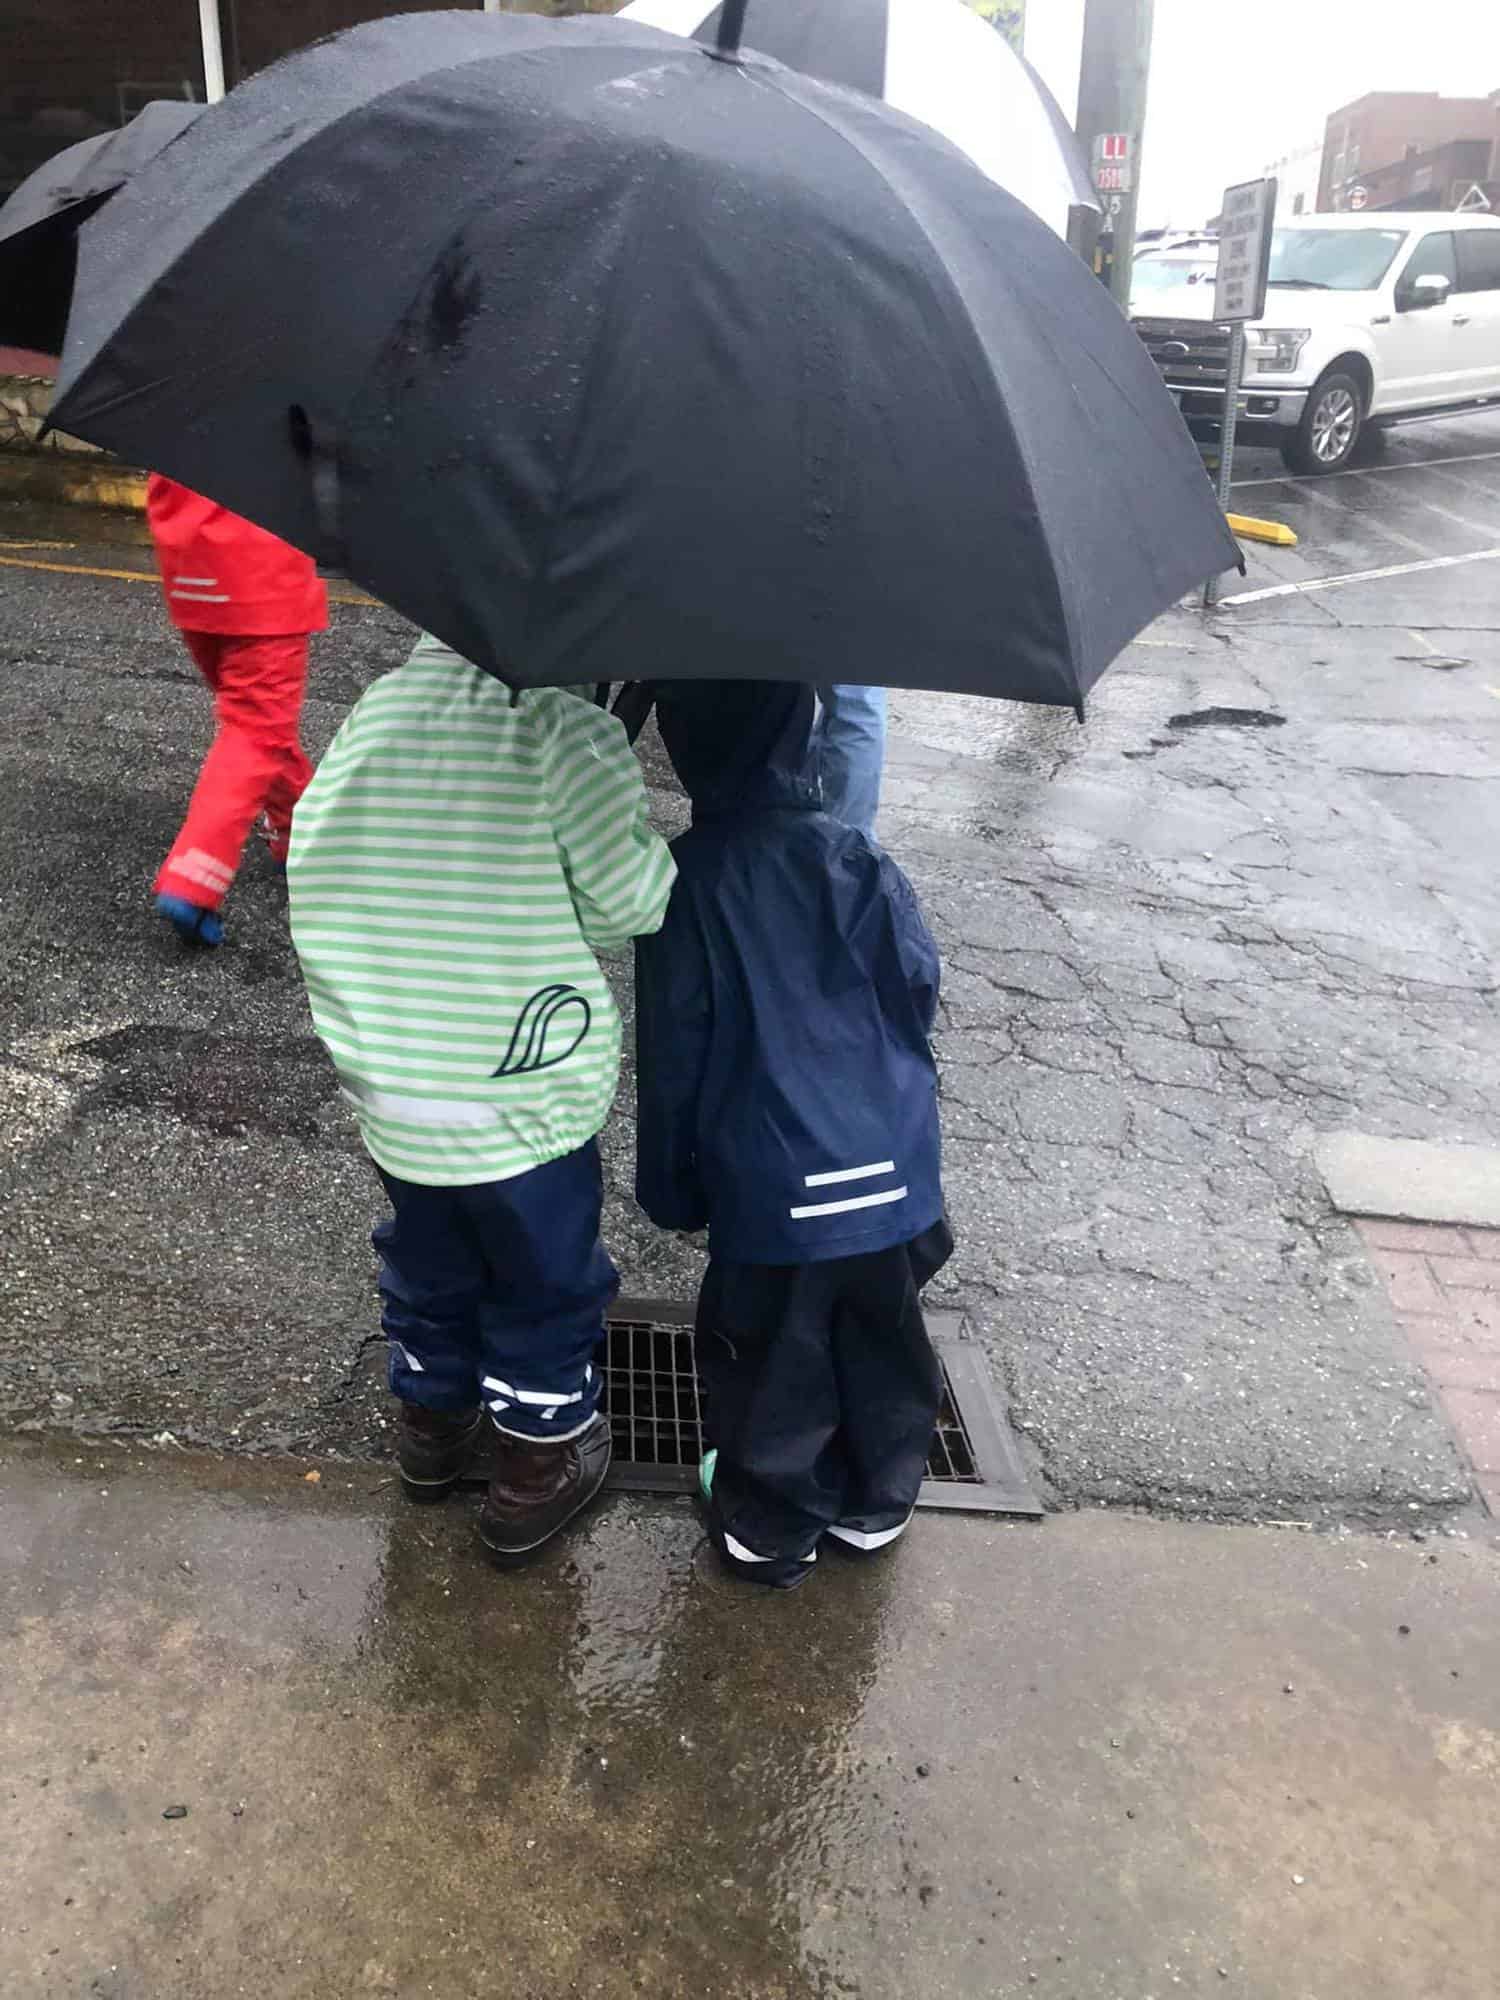 rainy day activities for kids - go for a rain walk